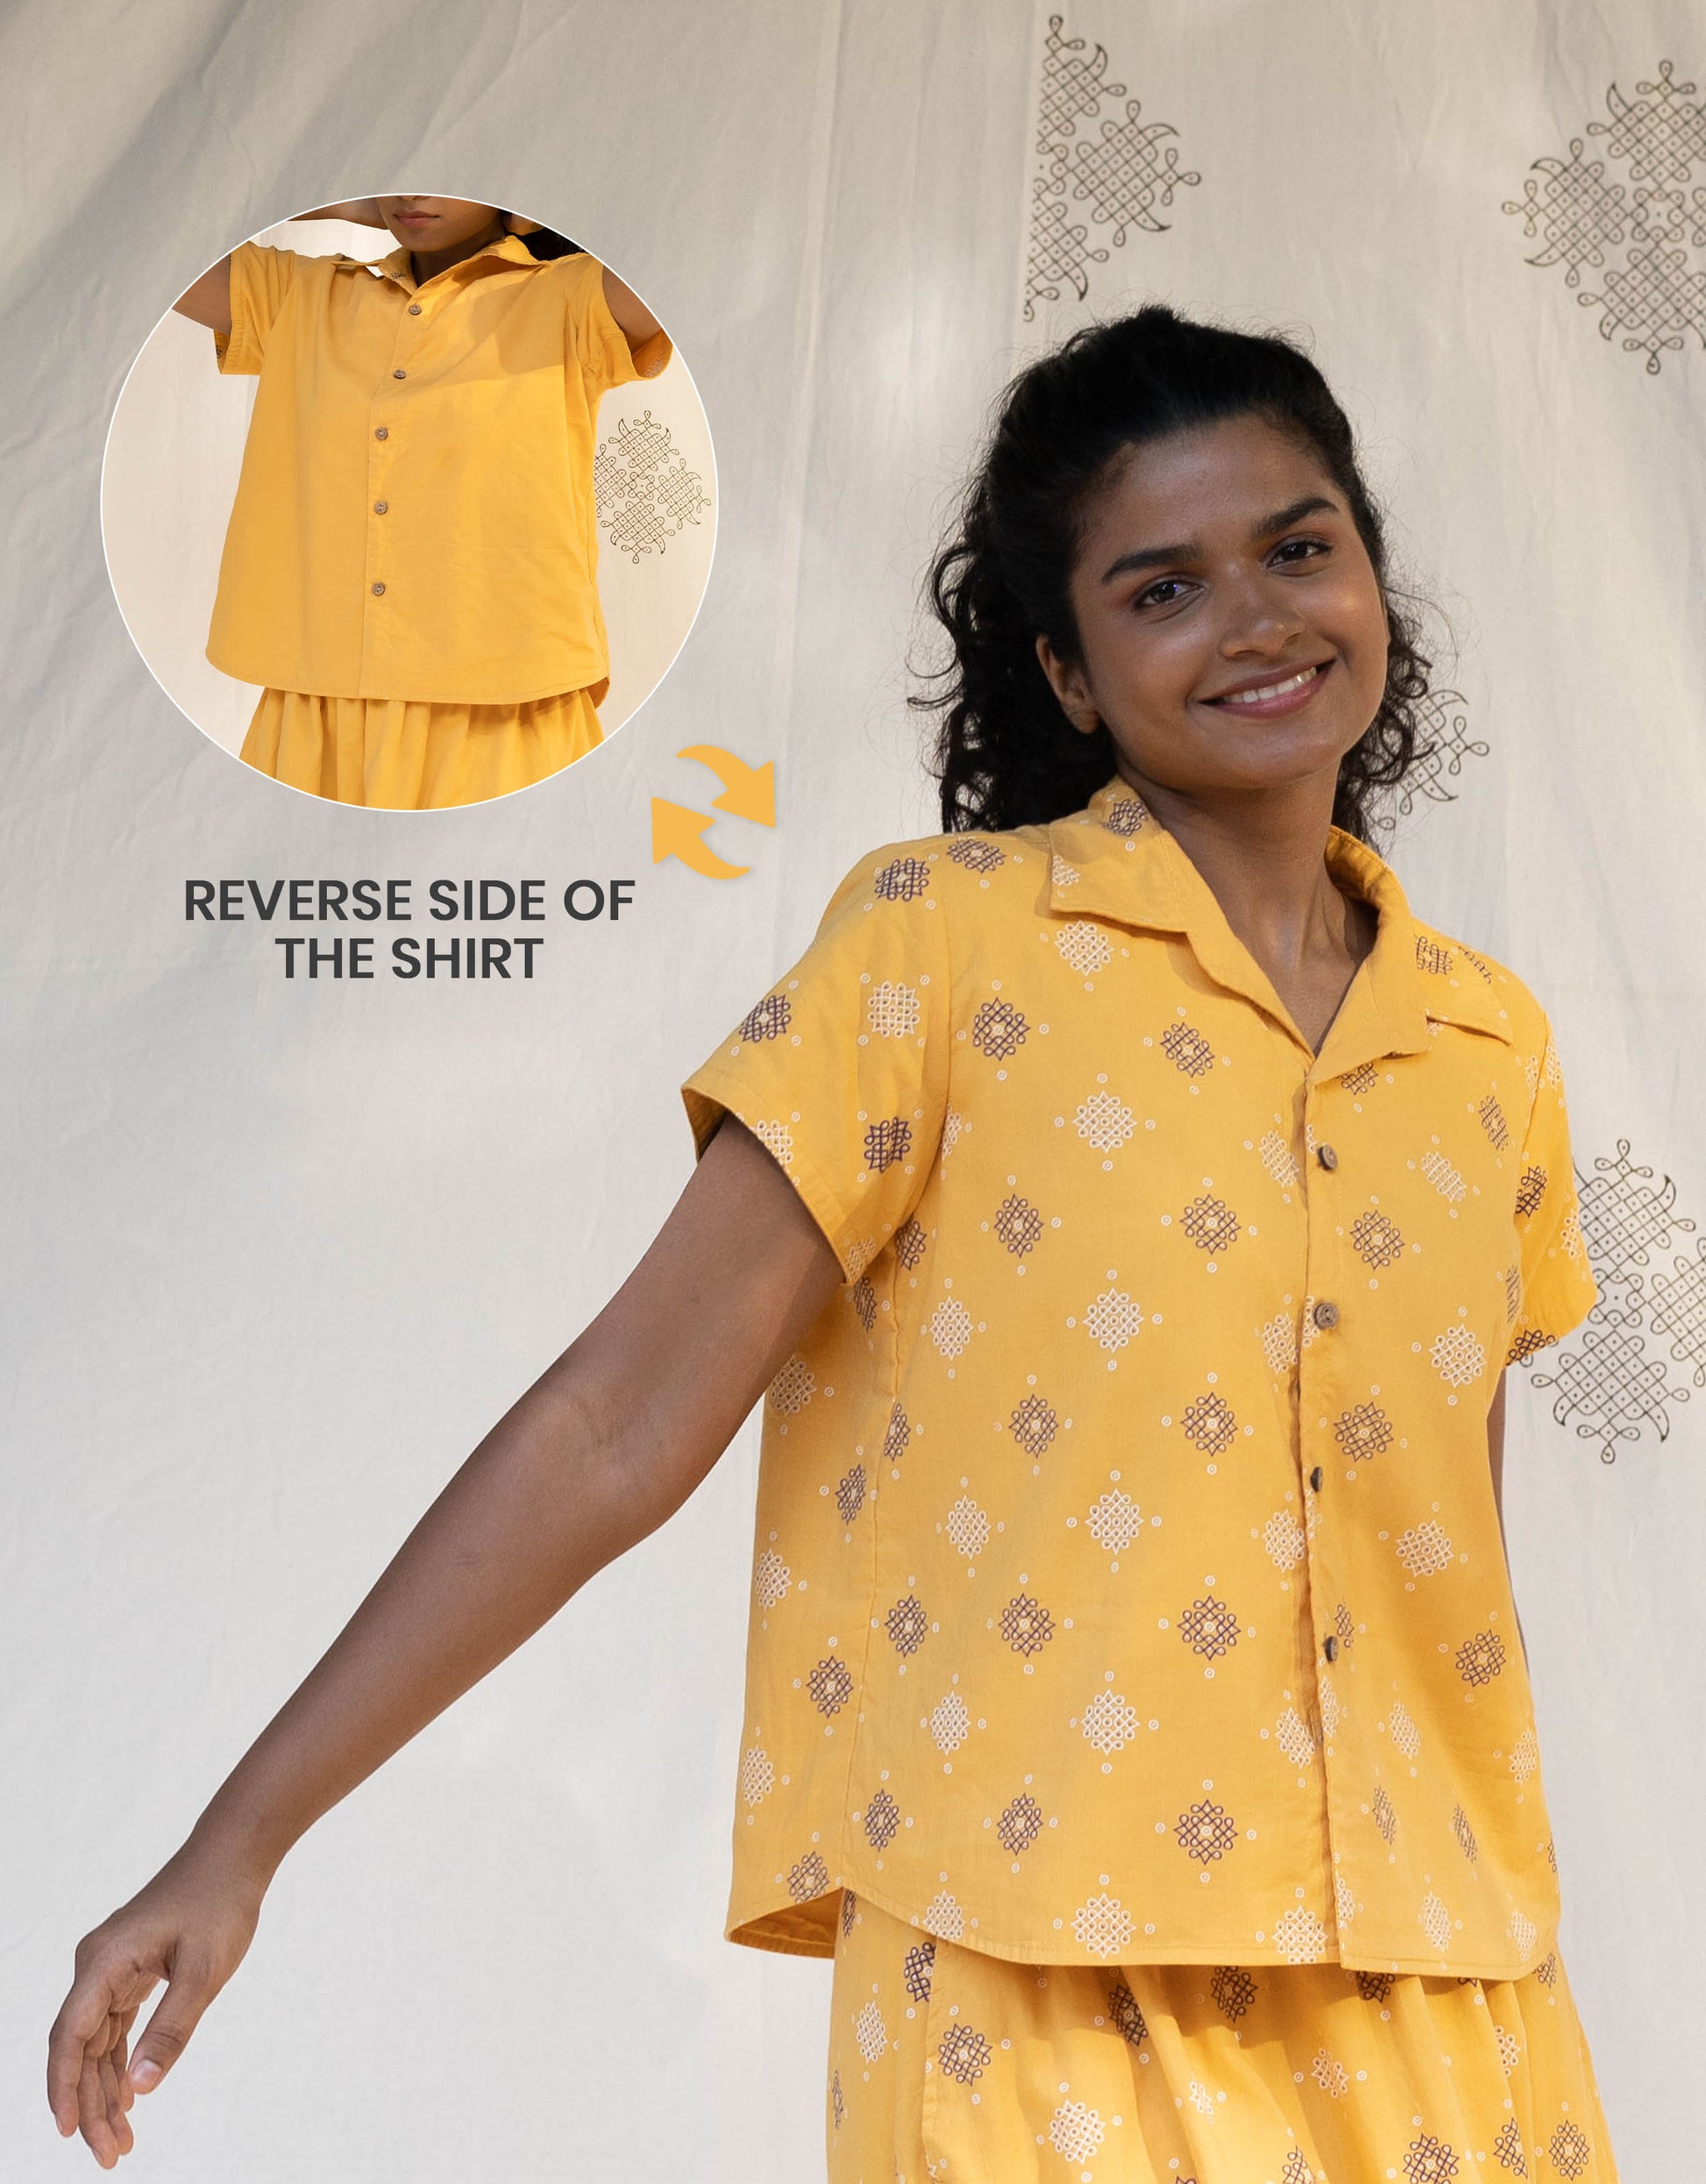 Front view of Hueloom's Reversible Shirt in Yellow Kolam print showing versatile reversible option